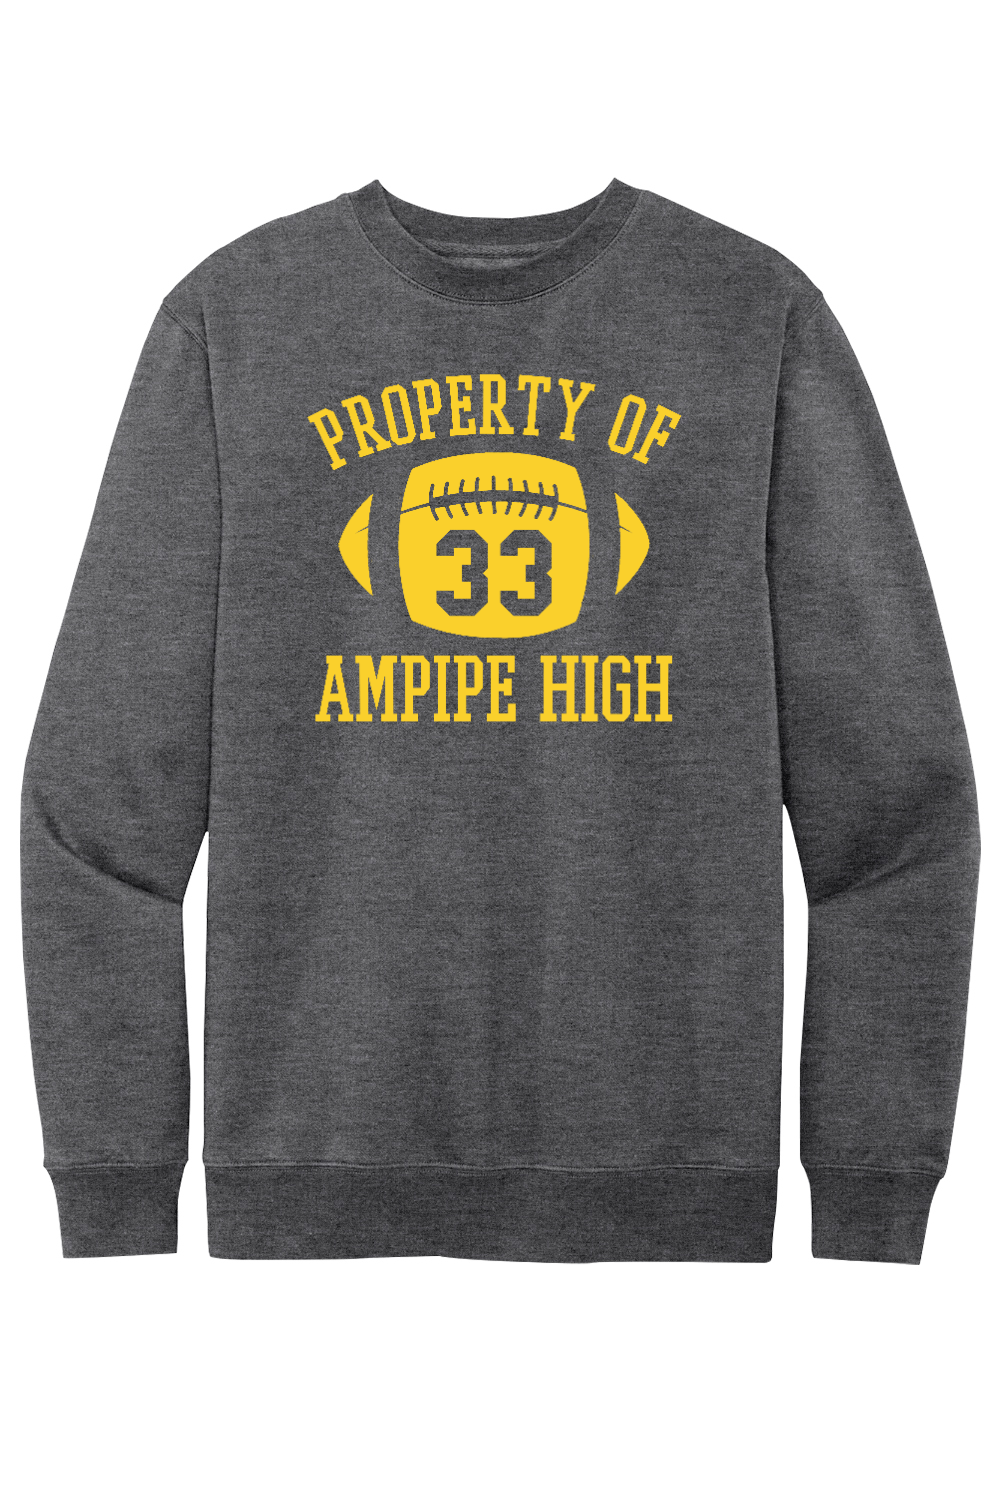 Property of Ampipe High (All the Right Moves) - Fleece Crewneck Sweatshirt - Yinzylvania